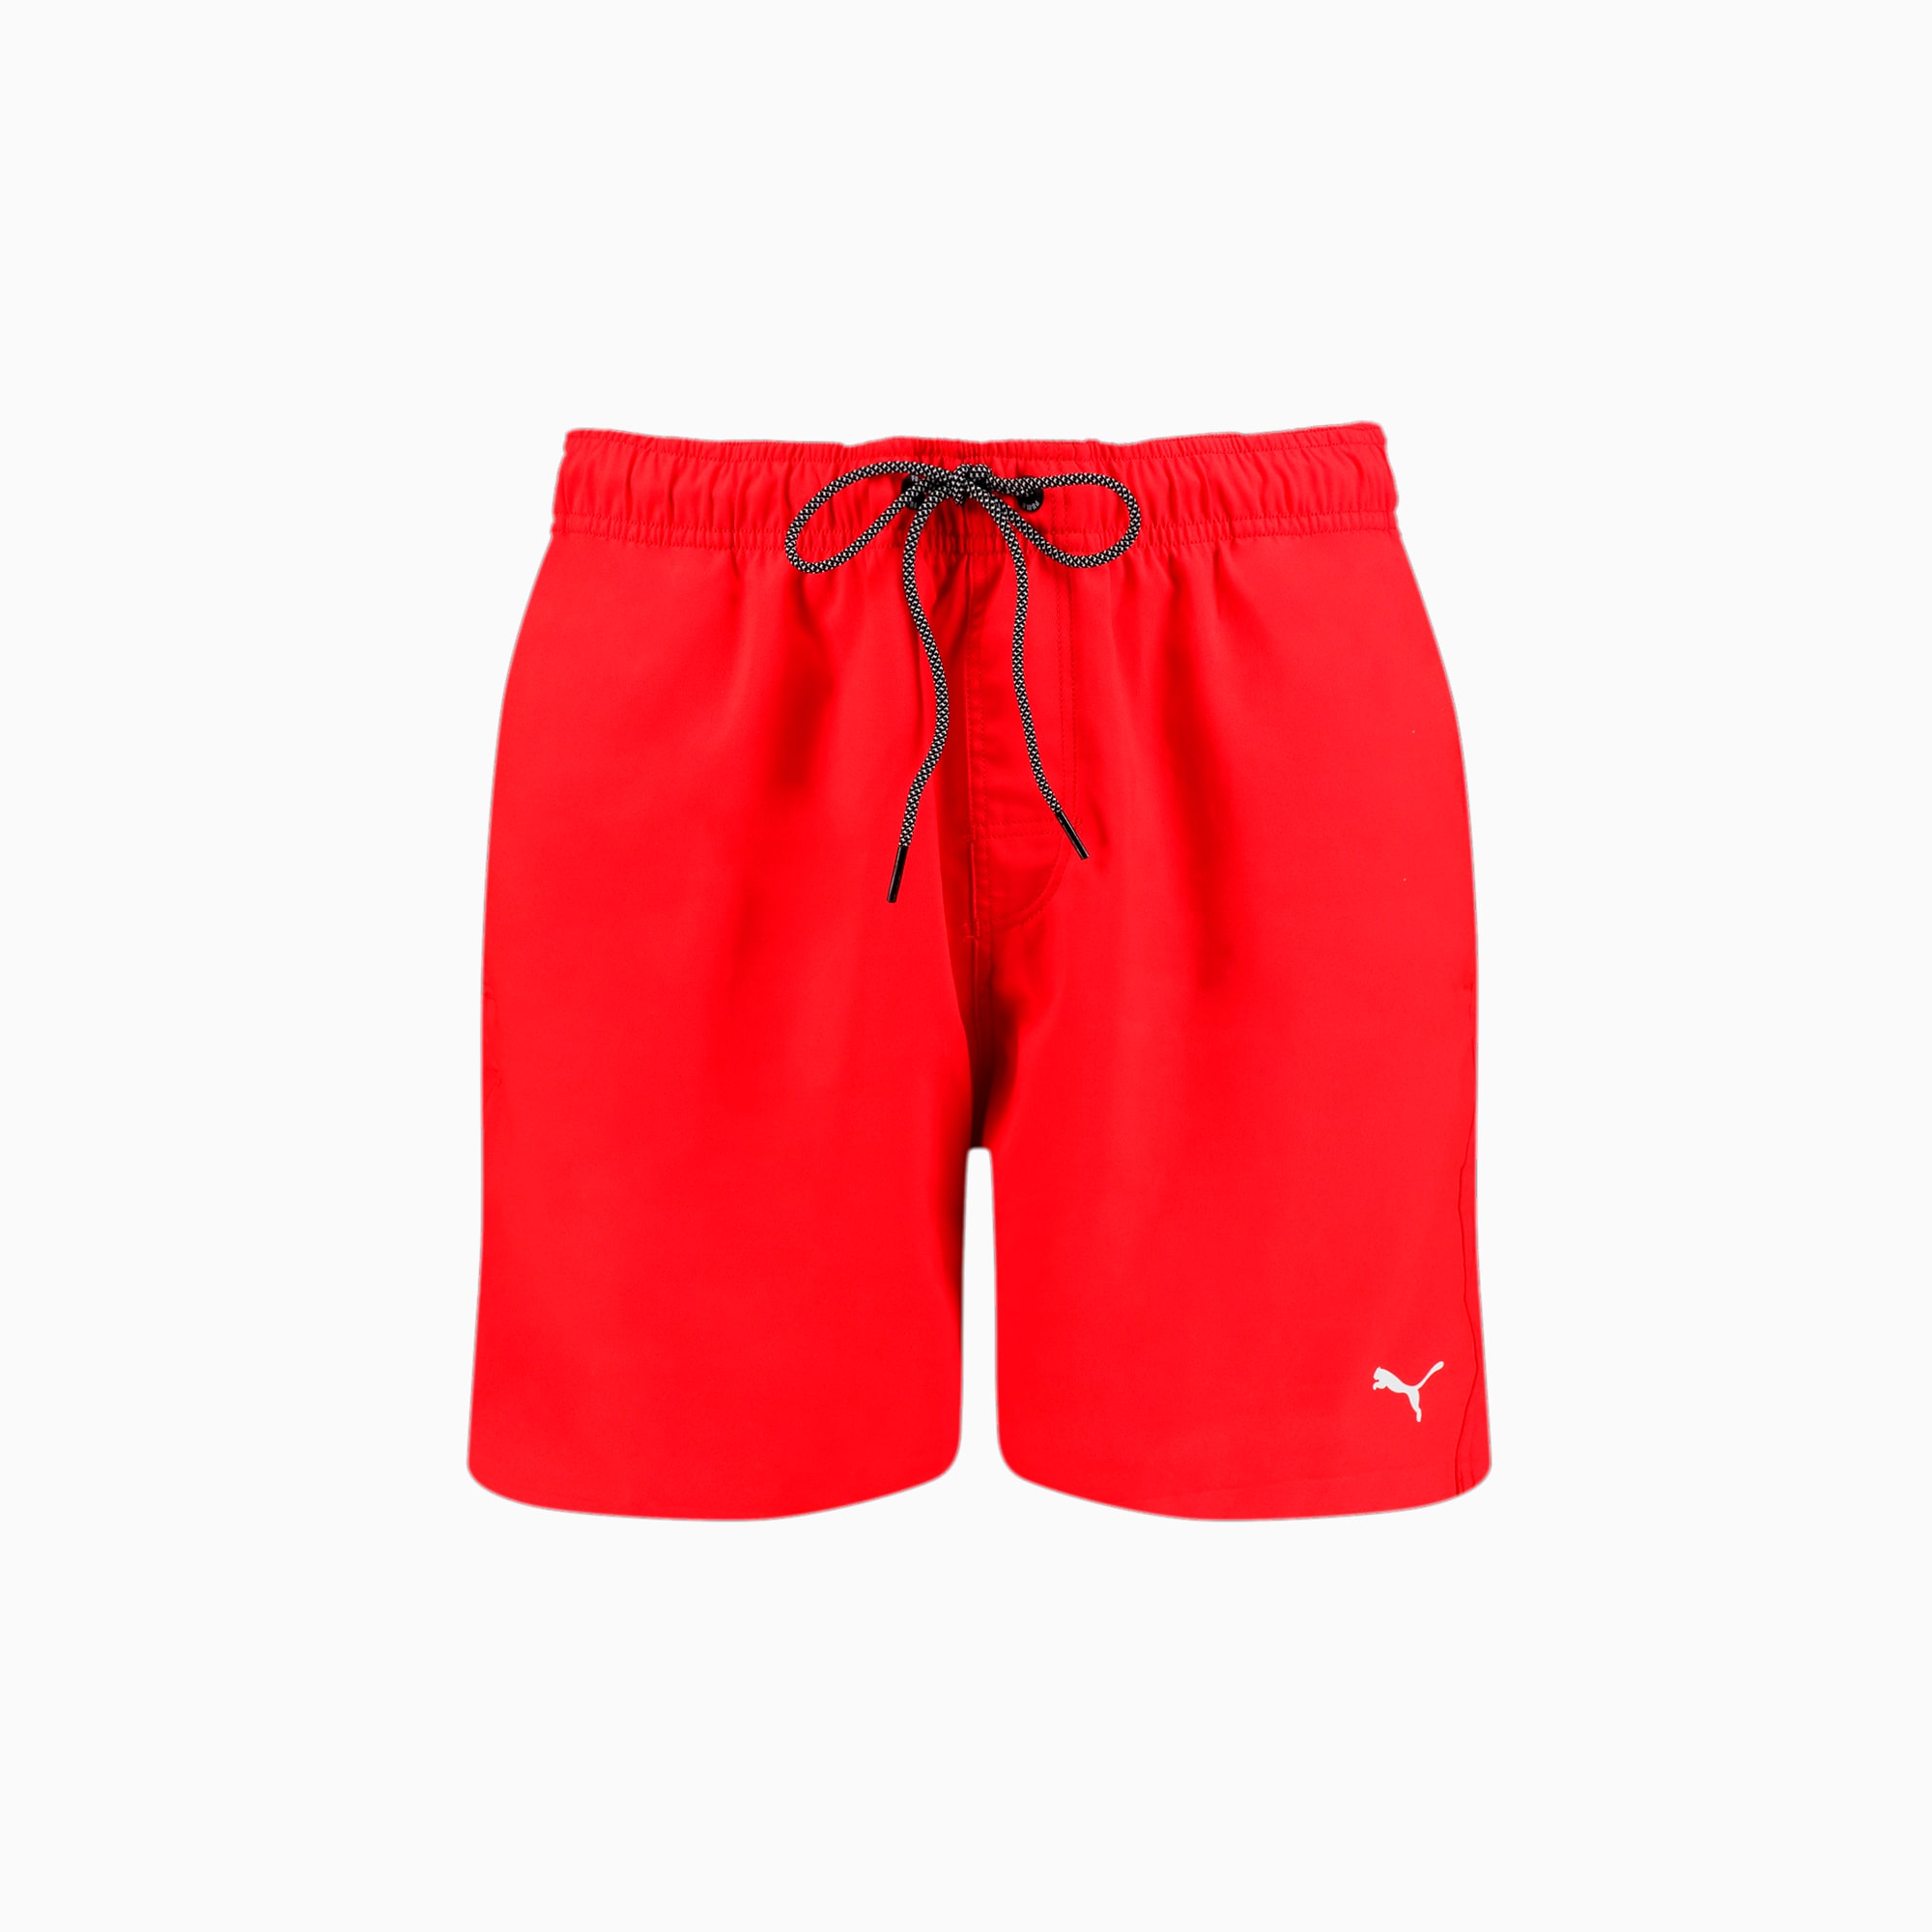 puma swimming shorts